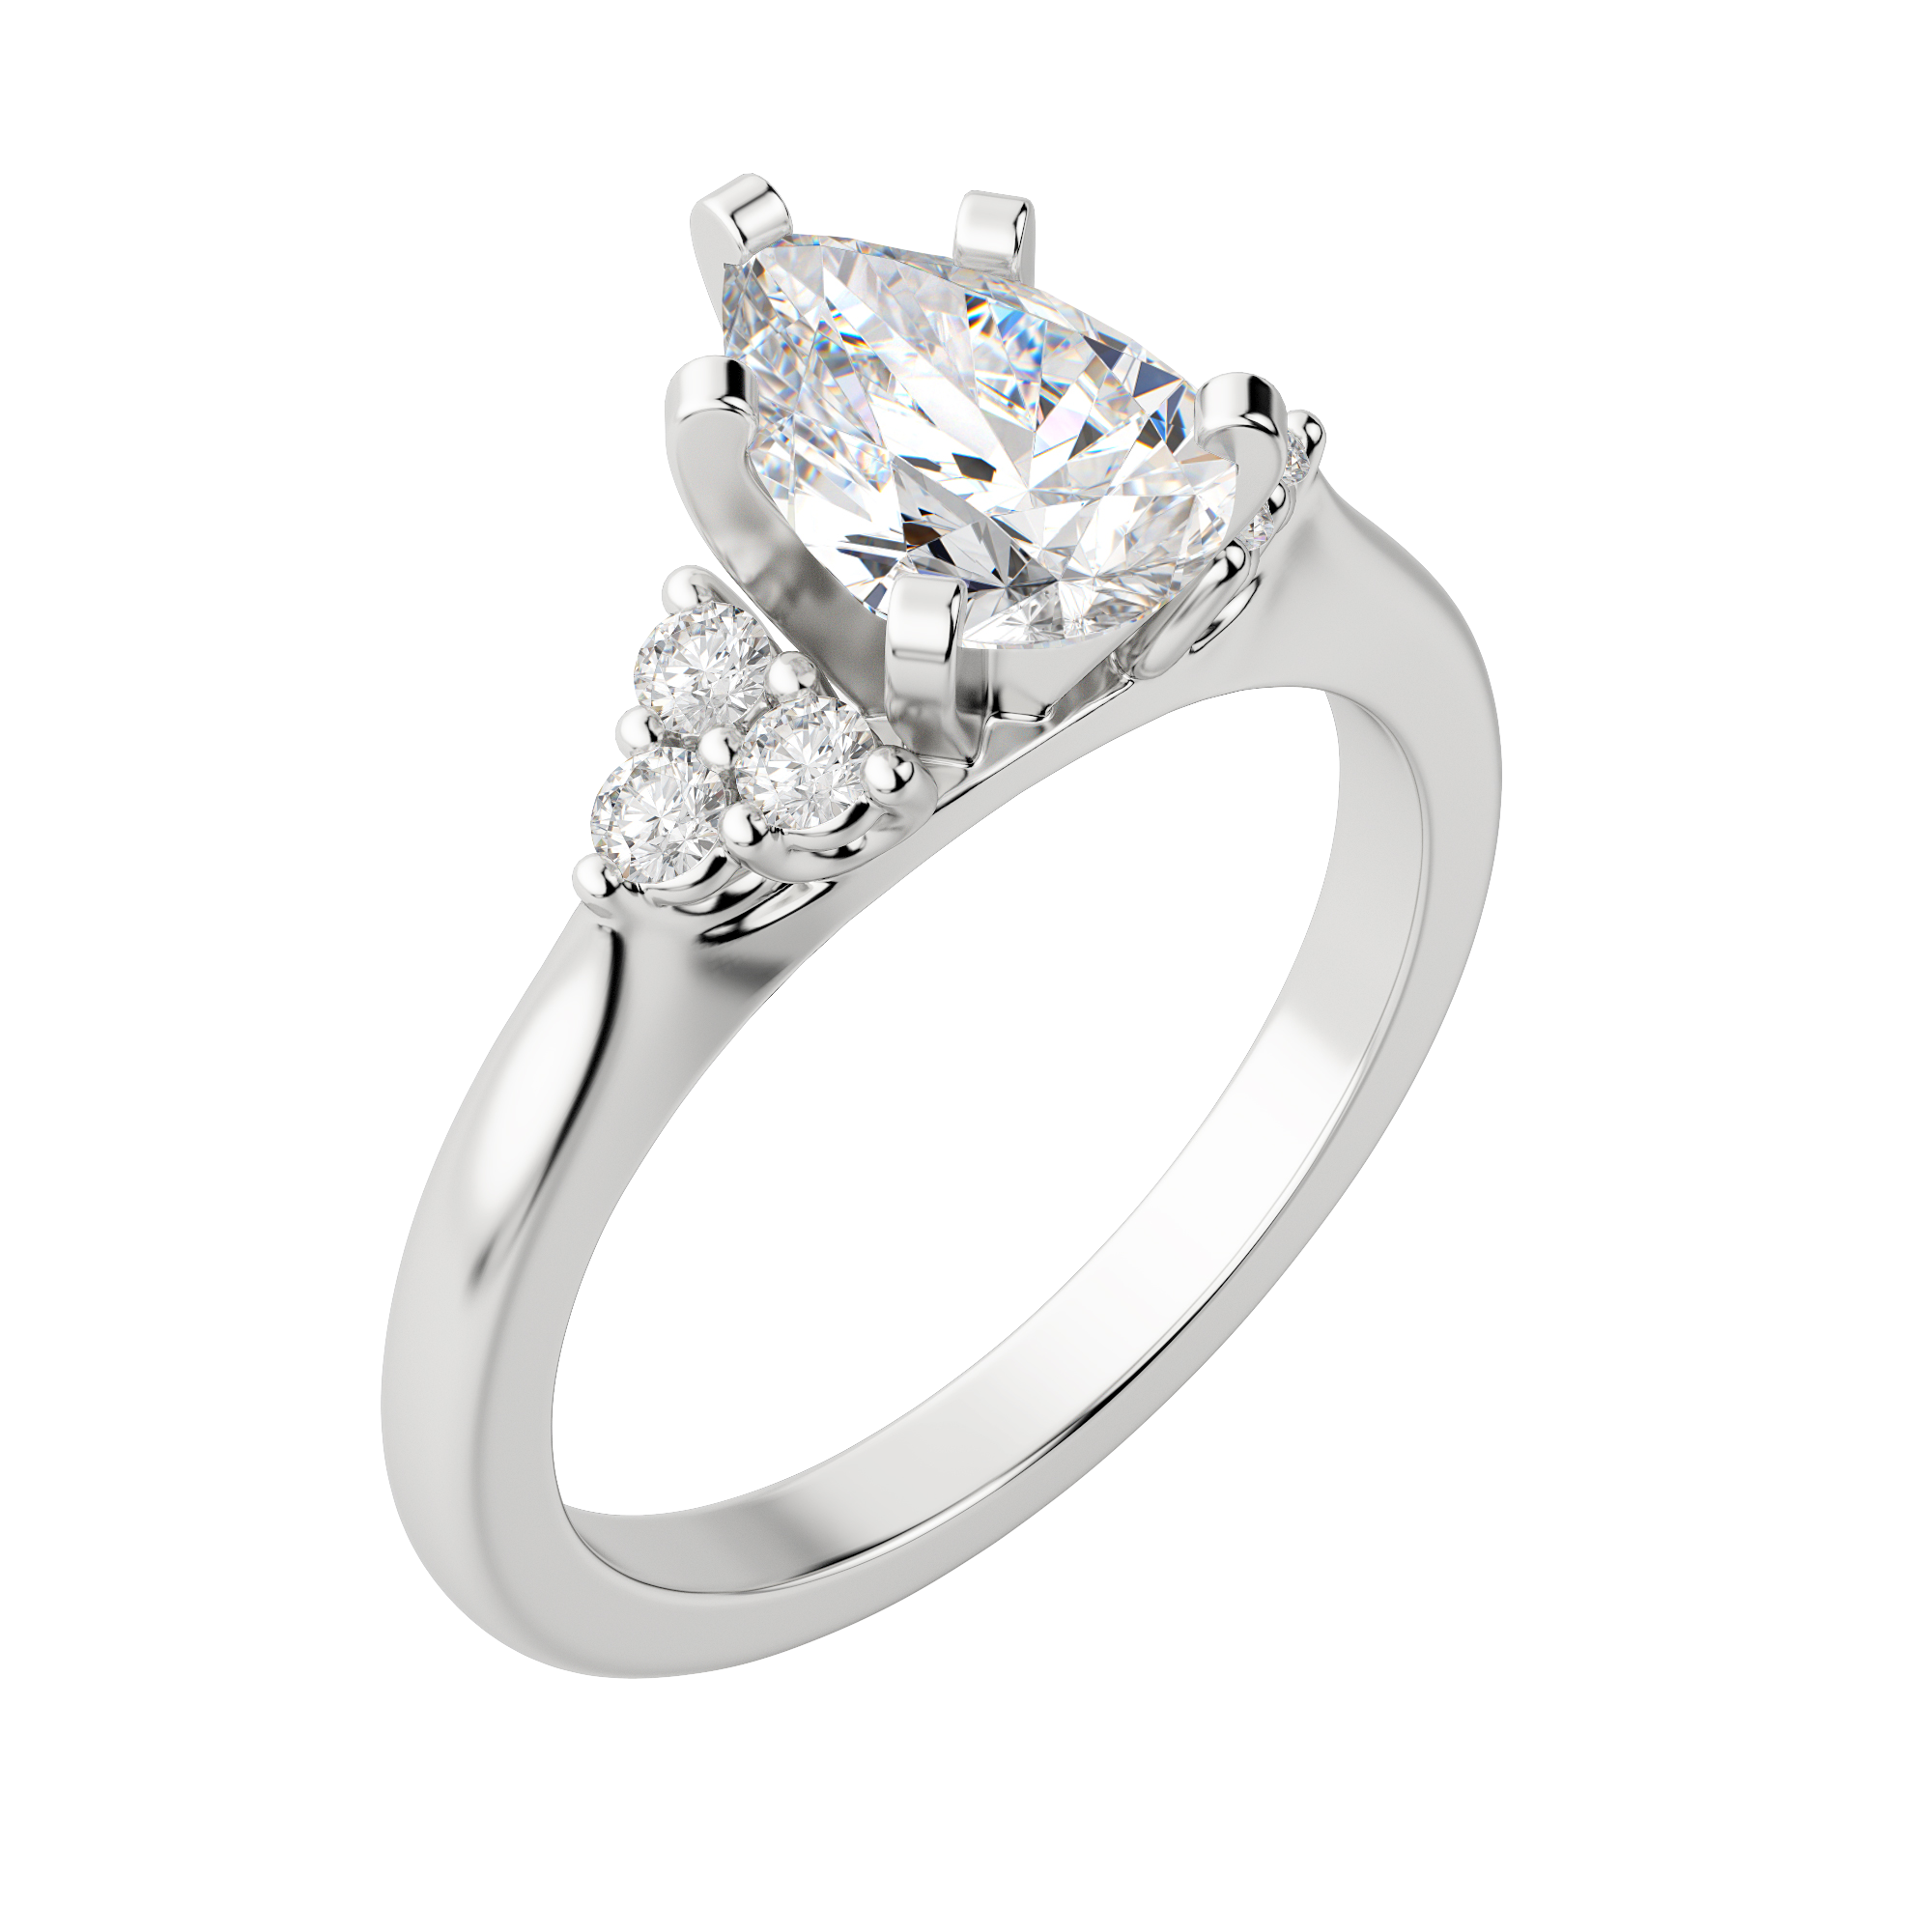 Calm Pear Cut Engagement Ring, Default, 18K White Gold, Platinum,